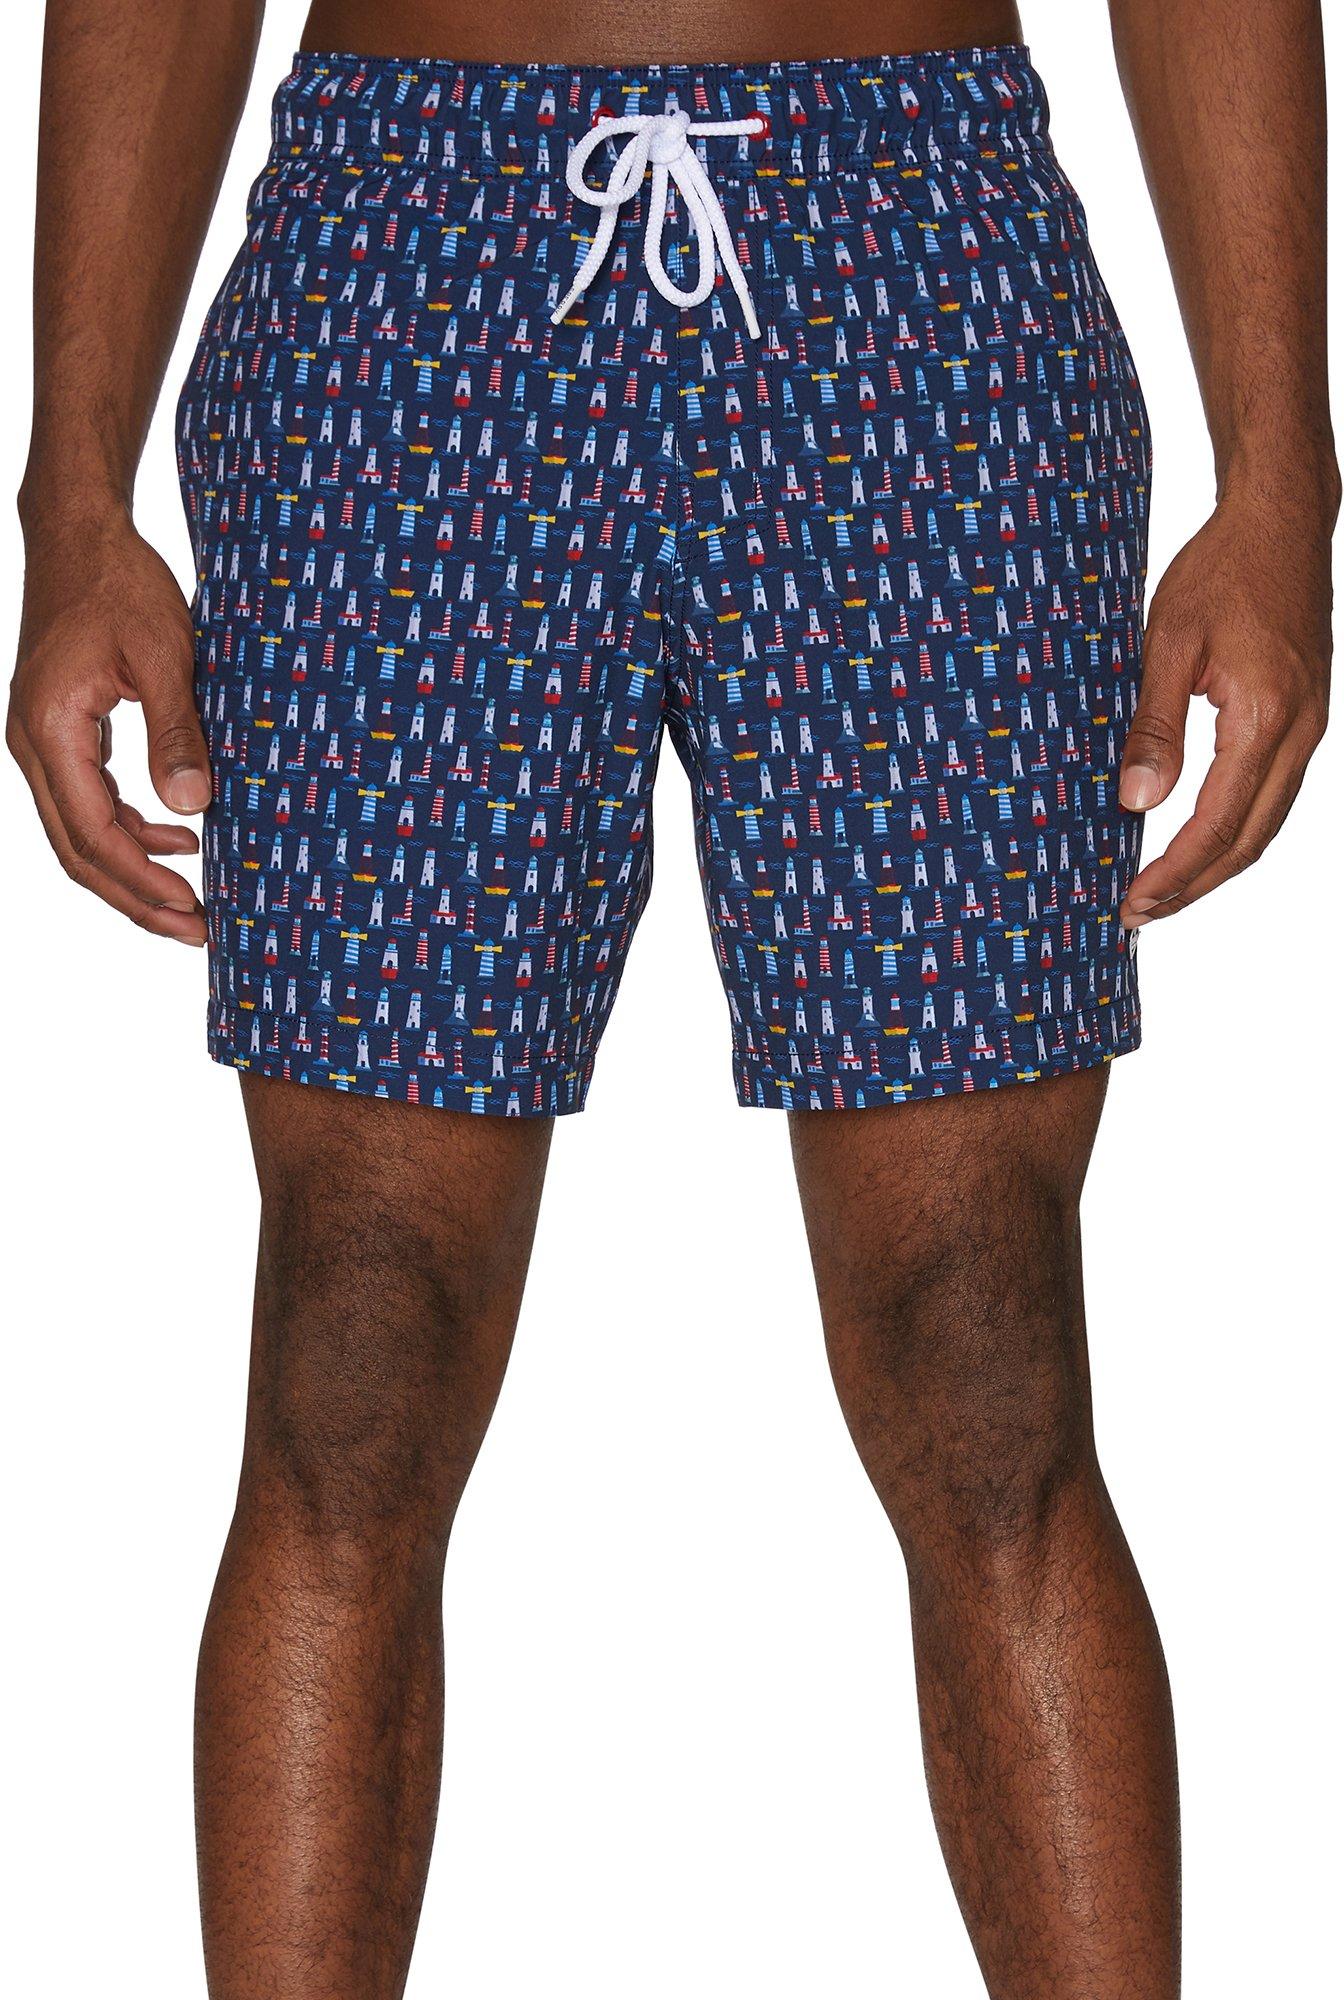 sperry board shorts